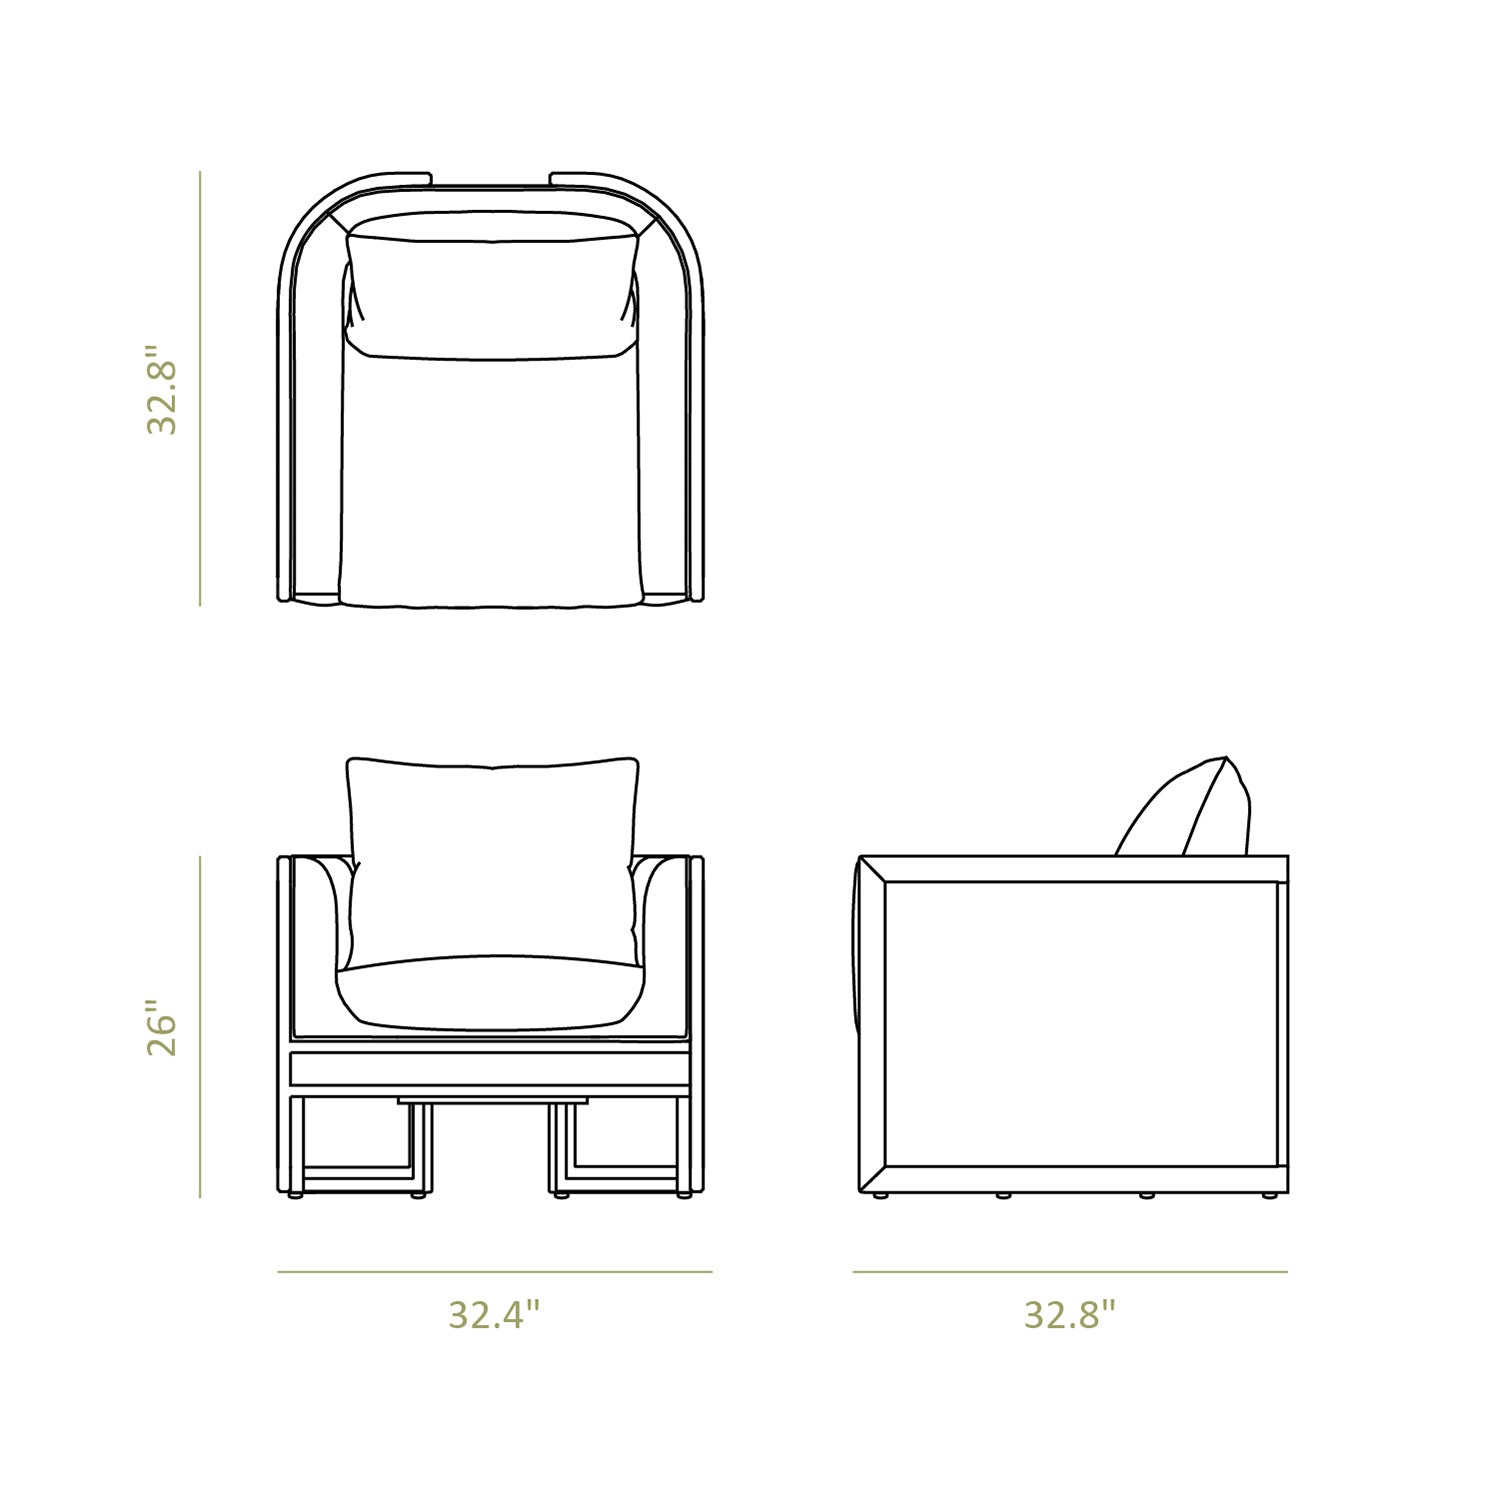 Neuwood Living Domicile Lounge Chair Dimensions